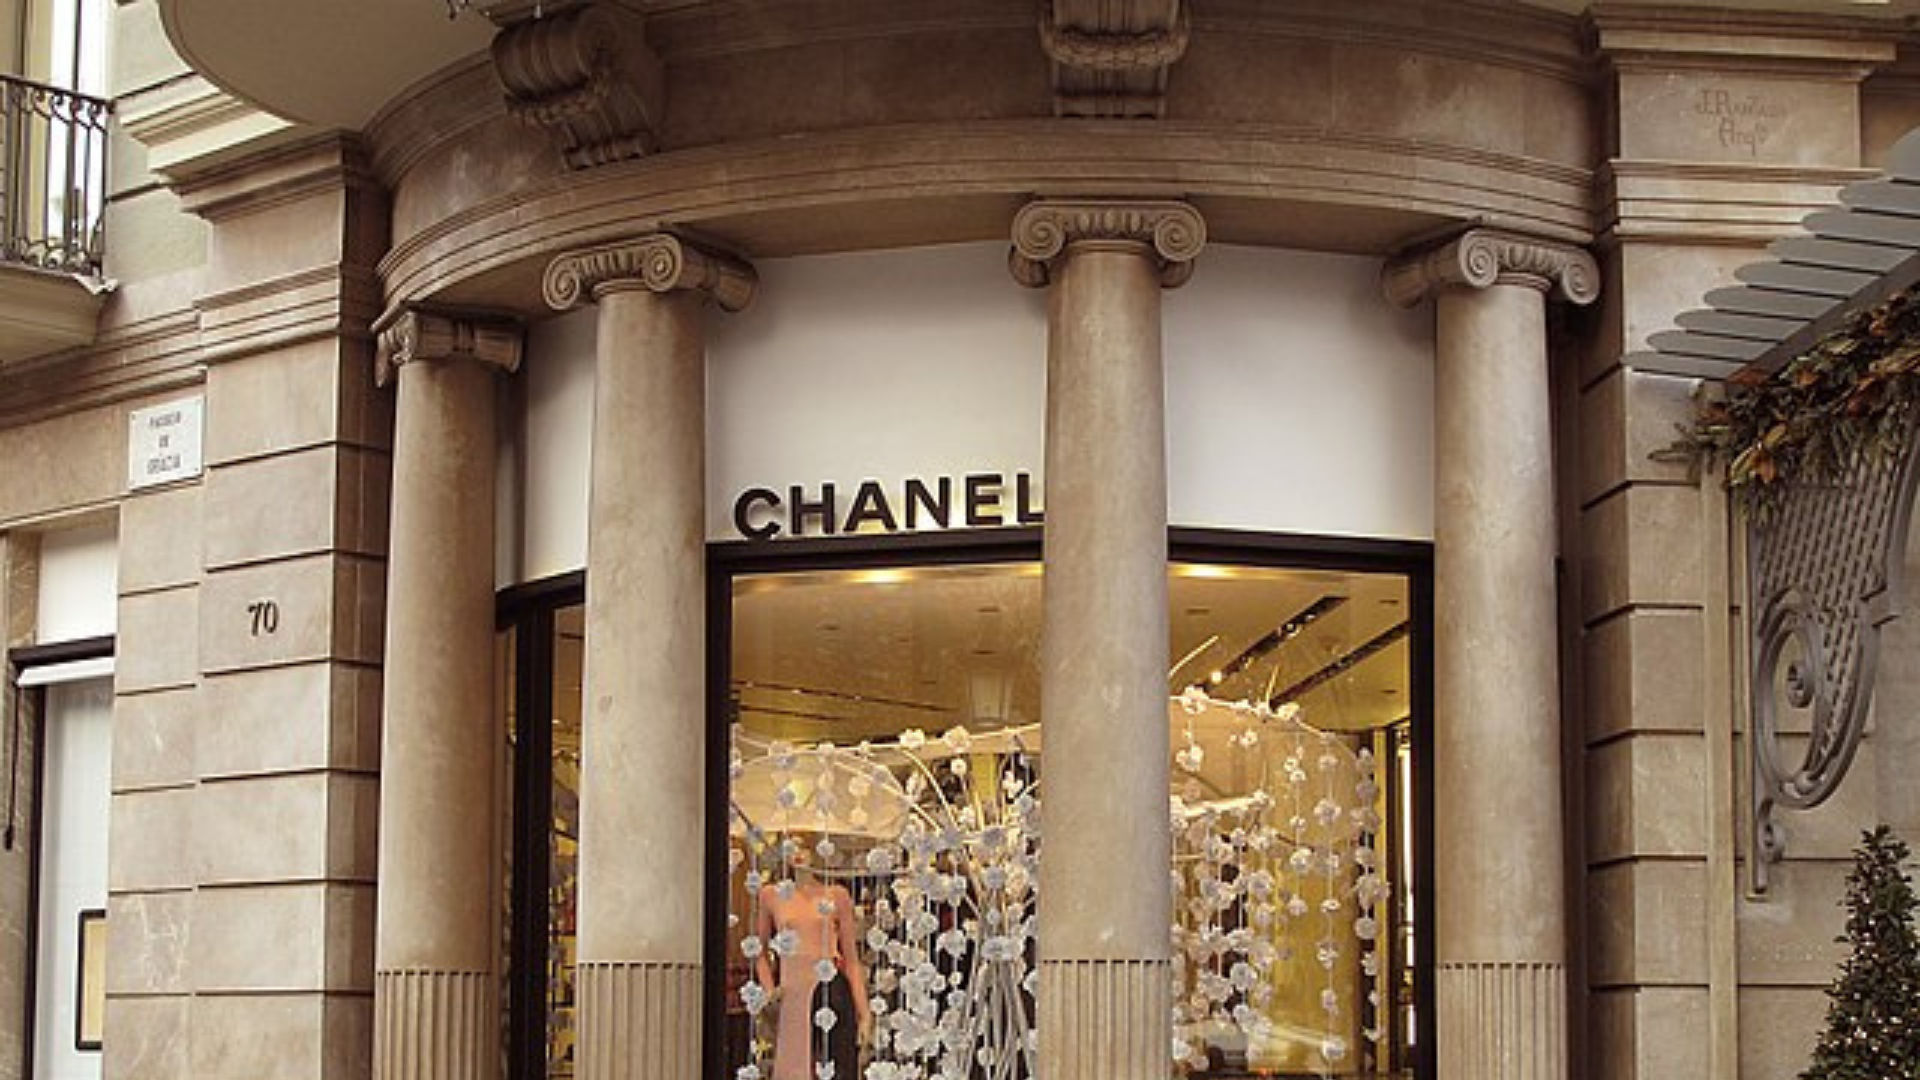 Ligner Napier sponsor Chanel to open private boutiques for premium clients